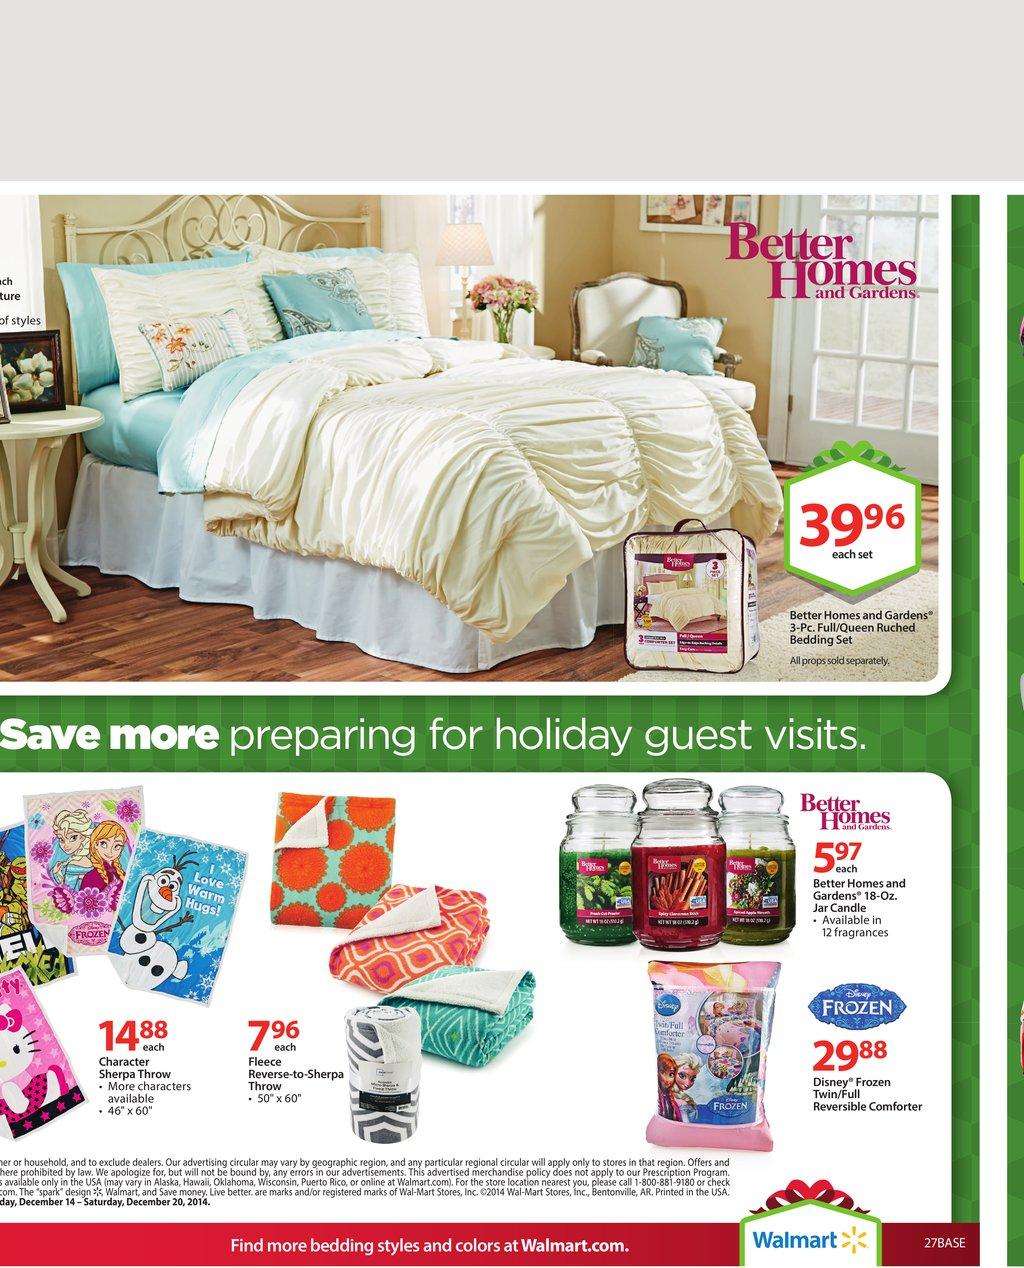 Walmart Weekly Ads Christmas Gifts 2014